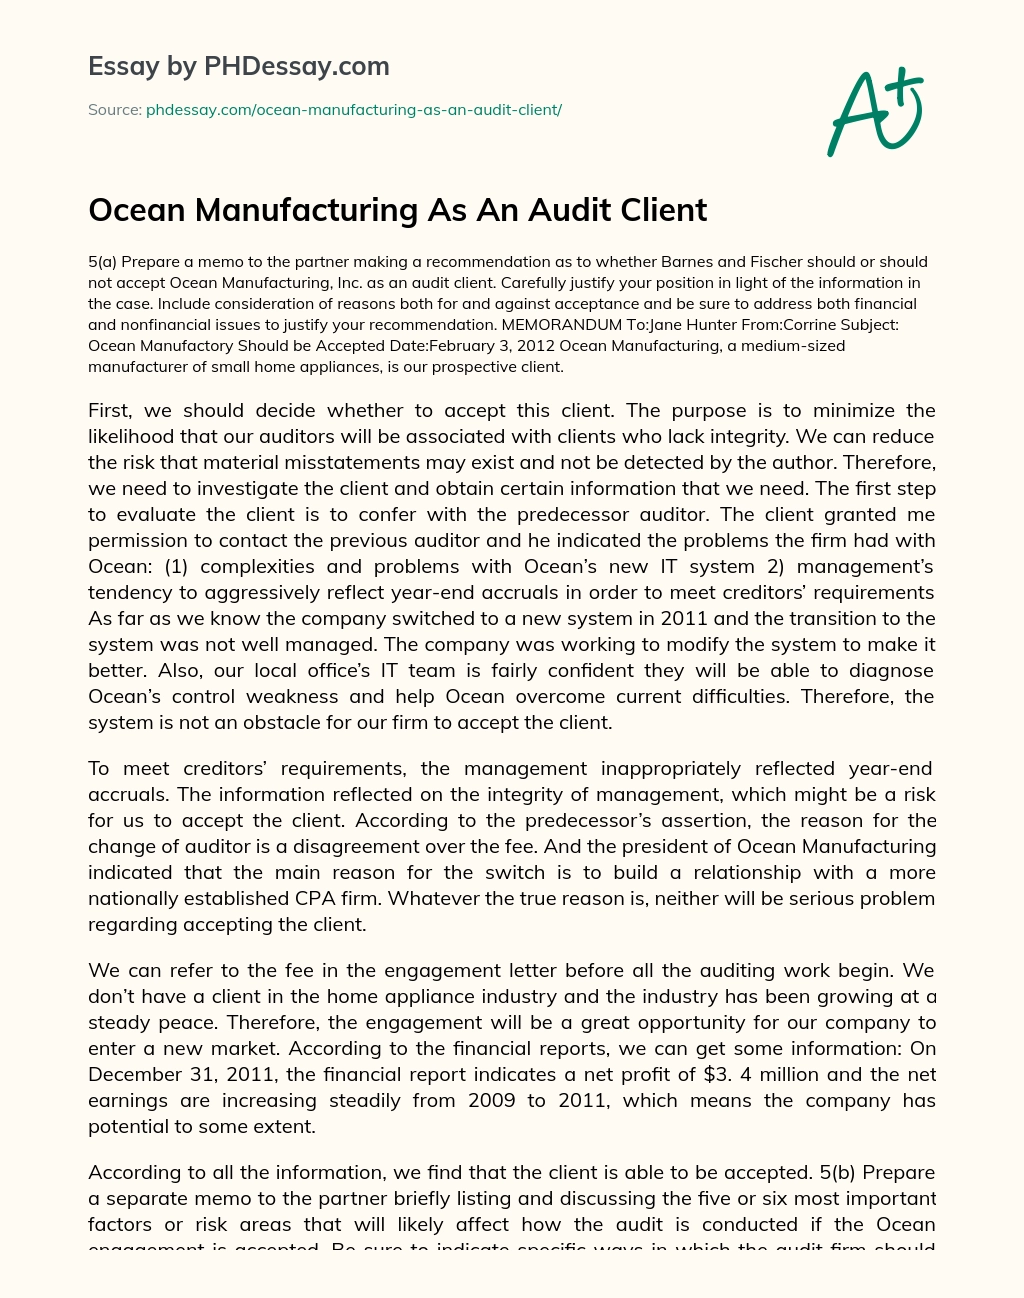 Ocean Manufacturing As An Audit Client essay